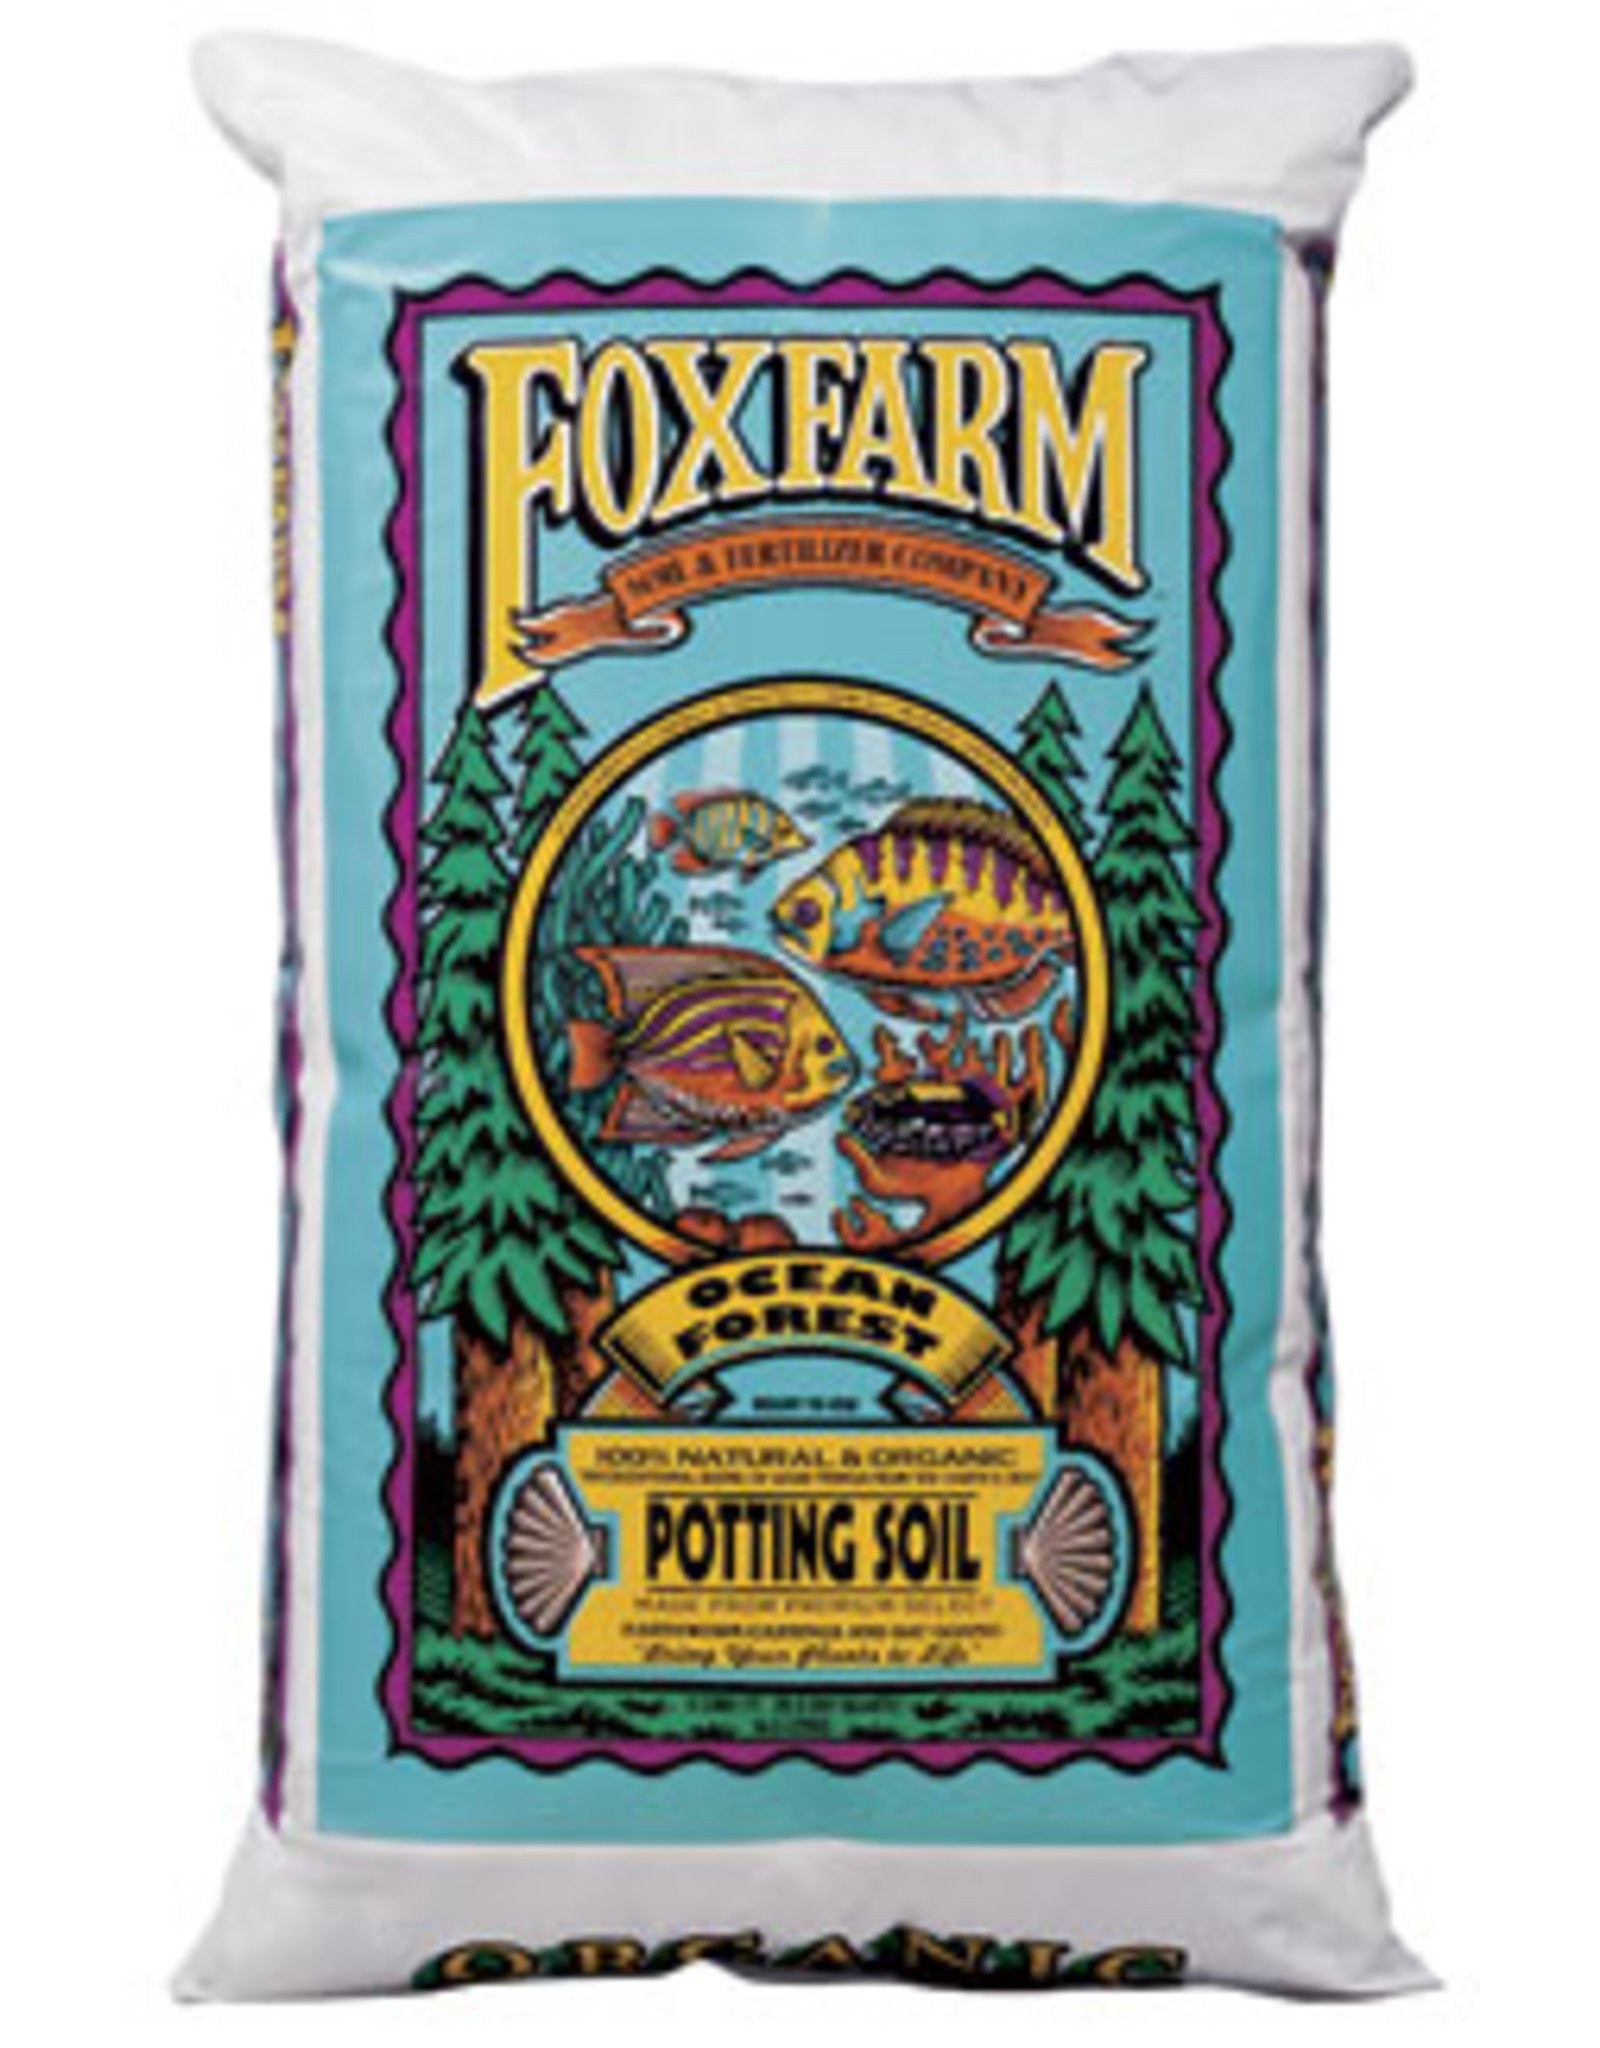 Foxfarm FoxFarm Ocean Forest Potting Soil 1.5 cu ft